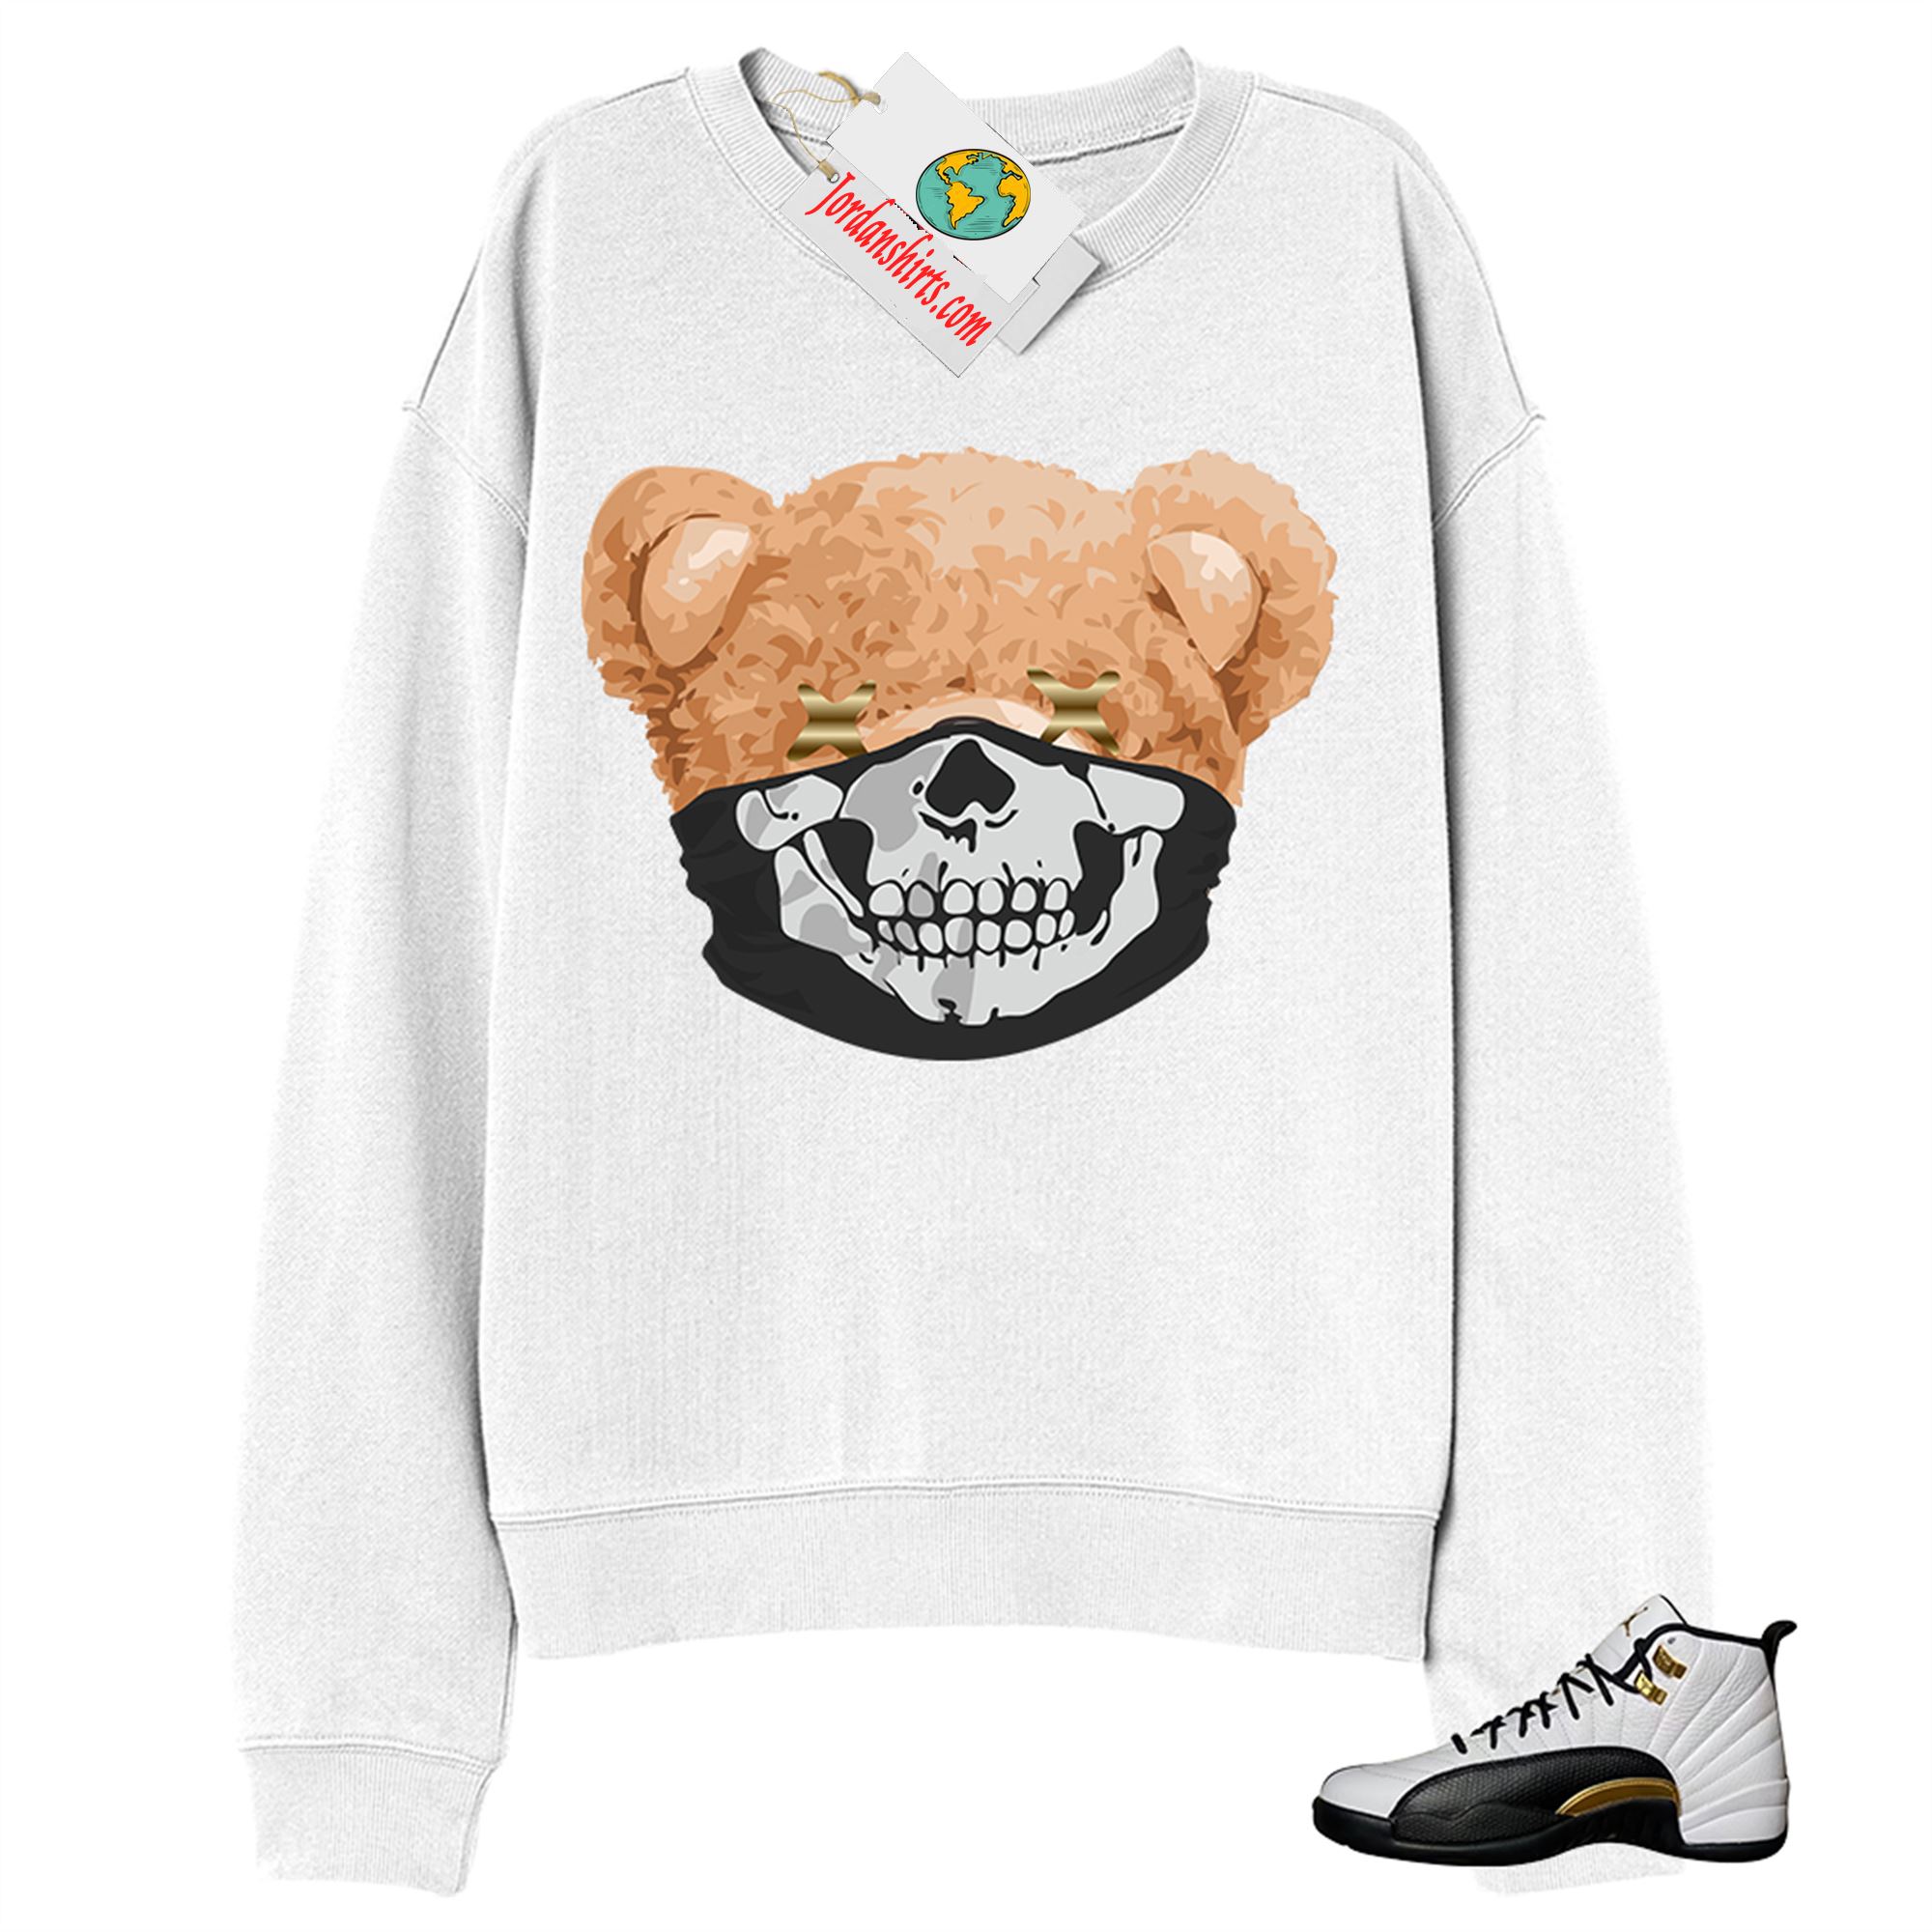 Jordan 12 Sweatshirt, Teddy Bear Skull Bandana White Sweatshirt Air Jordan 12 Royalty 12s Plus Size Up To 5xl